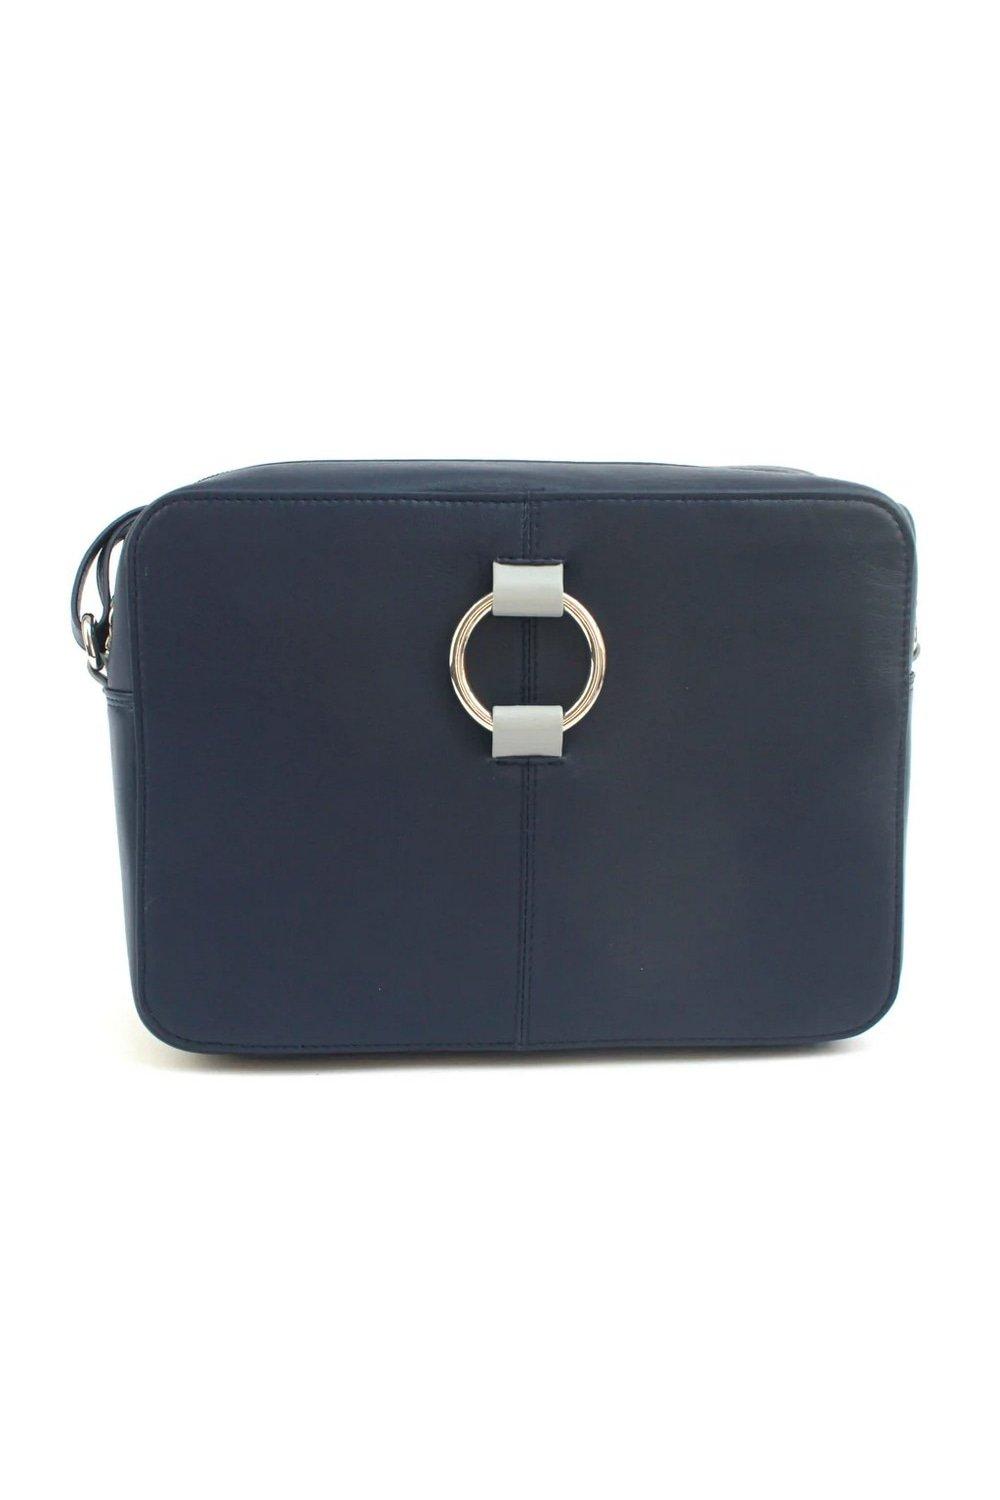 tuscany leather italy minerva кожаная сумка бакет темно синий Кожаная сумка Helen Eastern Counties Leather, темно-синий